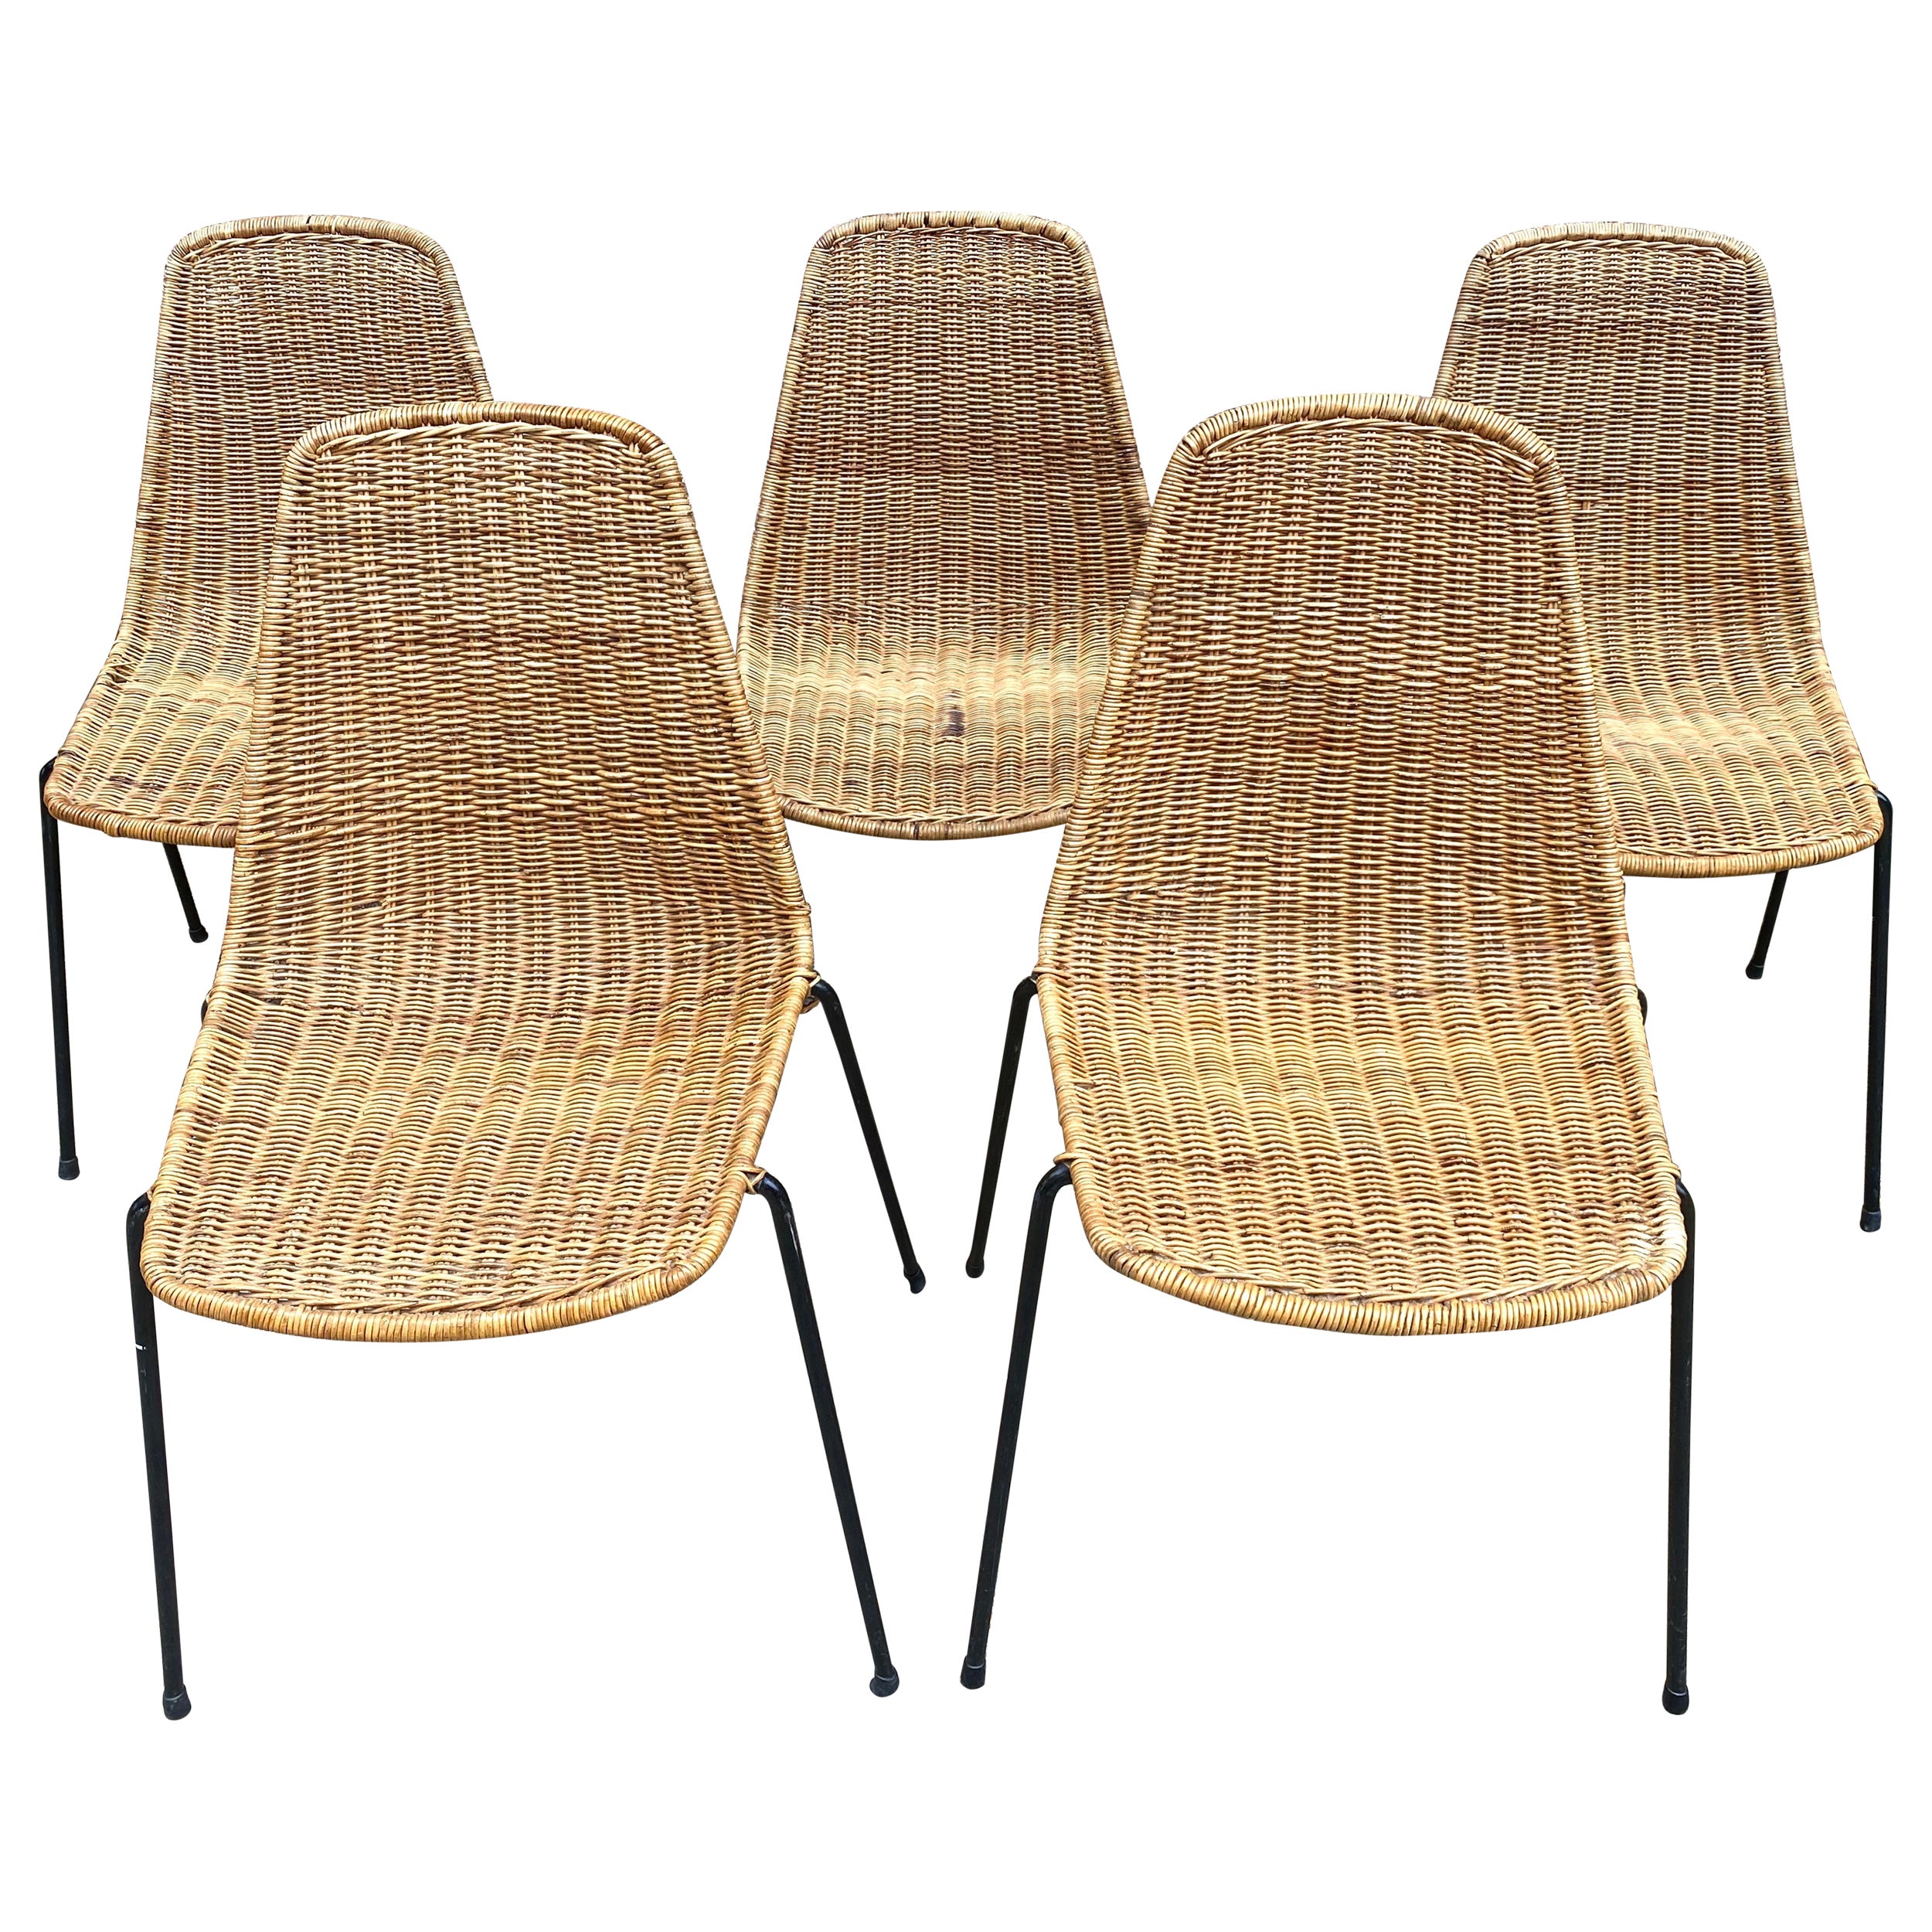 Set of 5 Gian Franco Legler Basket Chairs For Sale